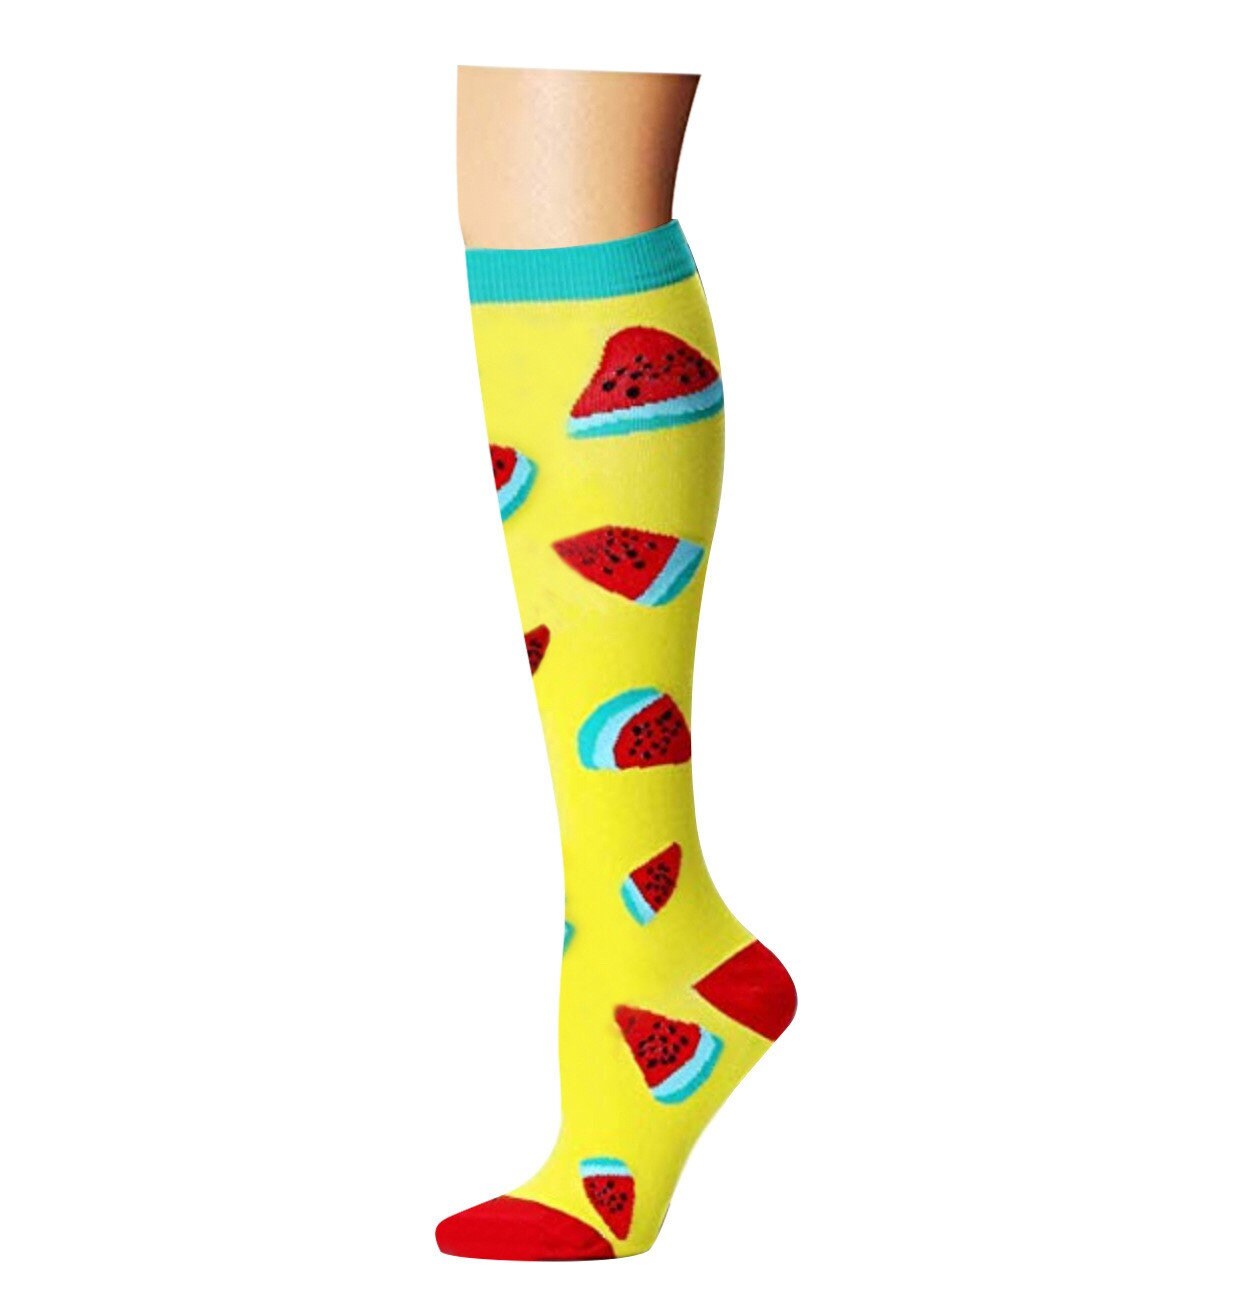 Watermelon compression socks 15-20 mm HG | Etsy